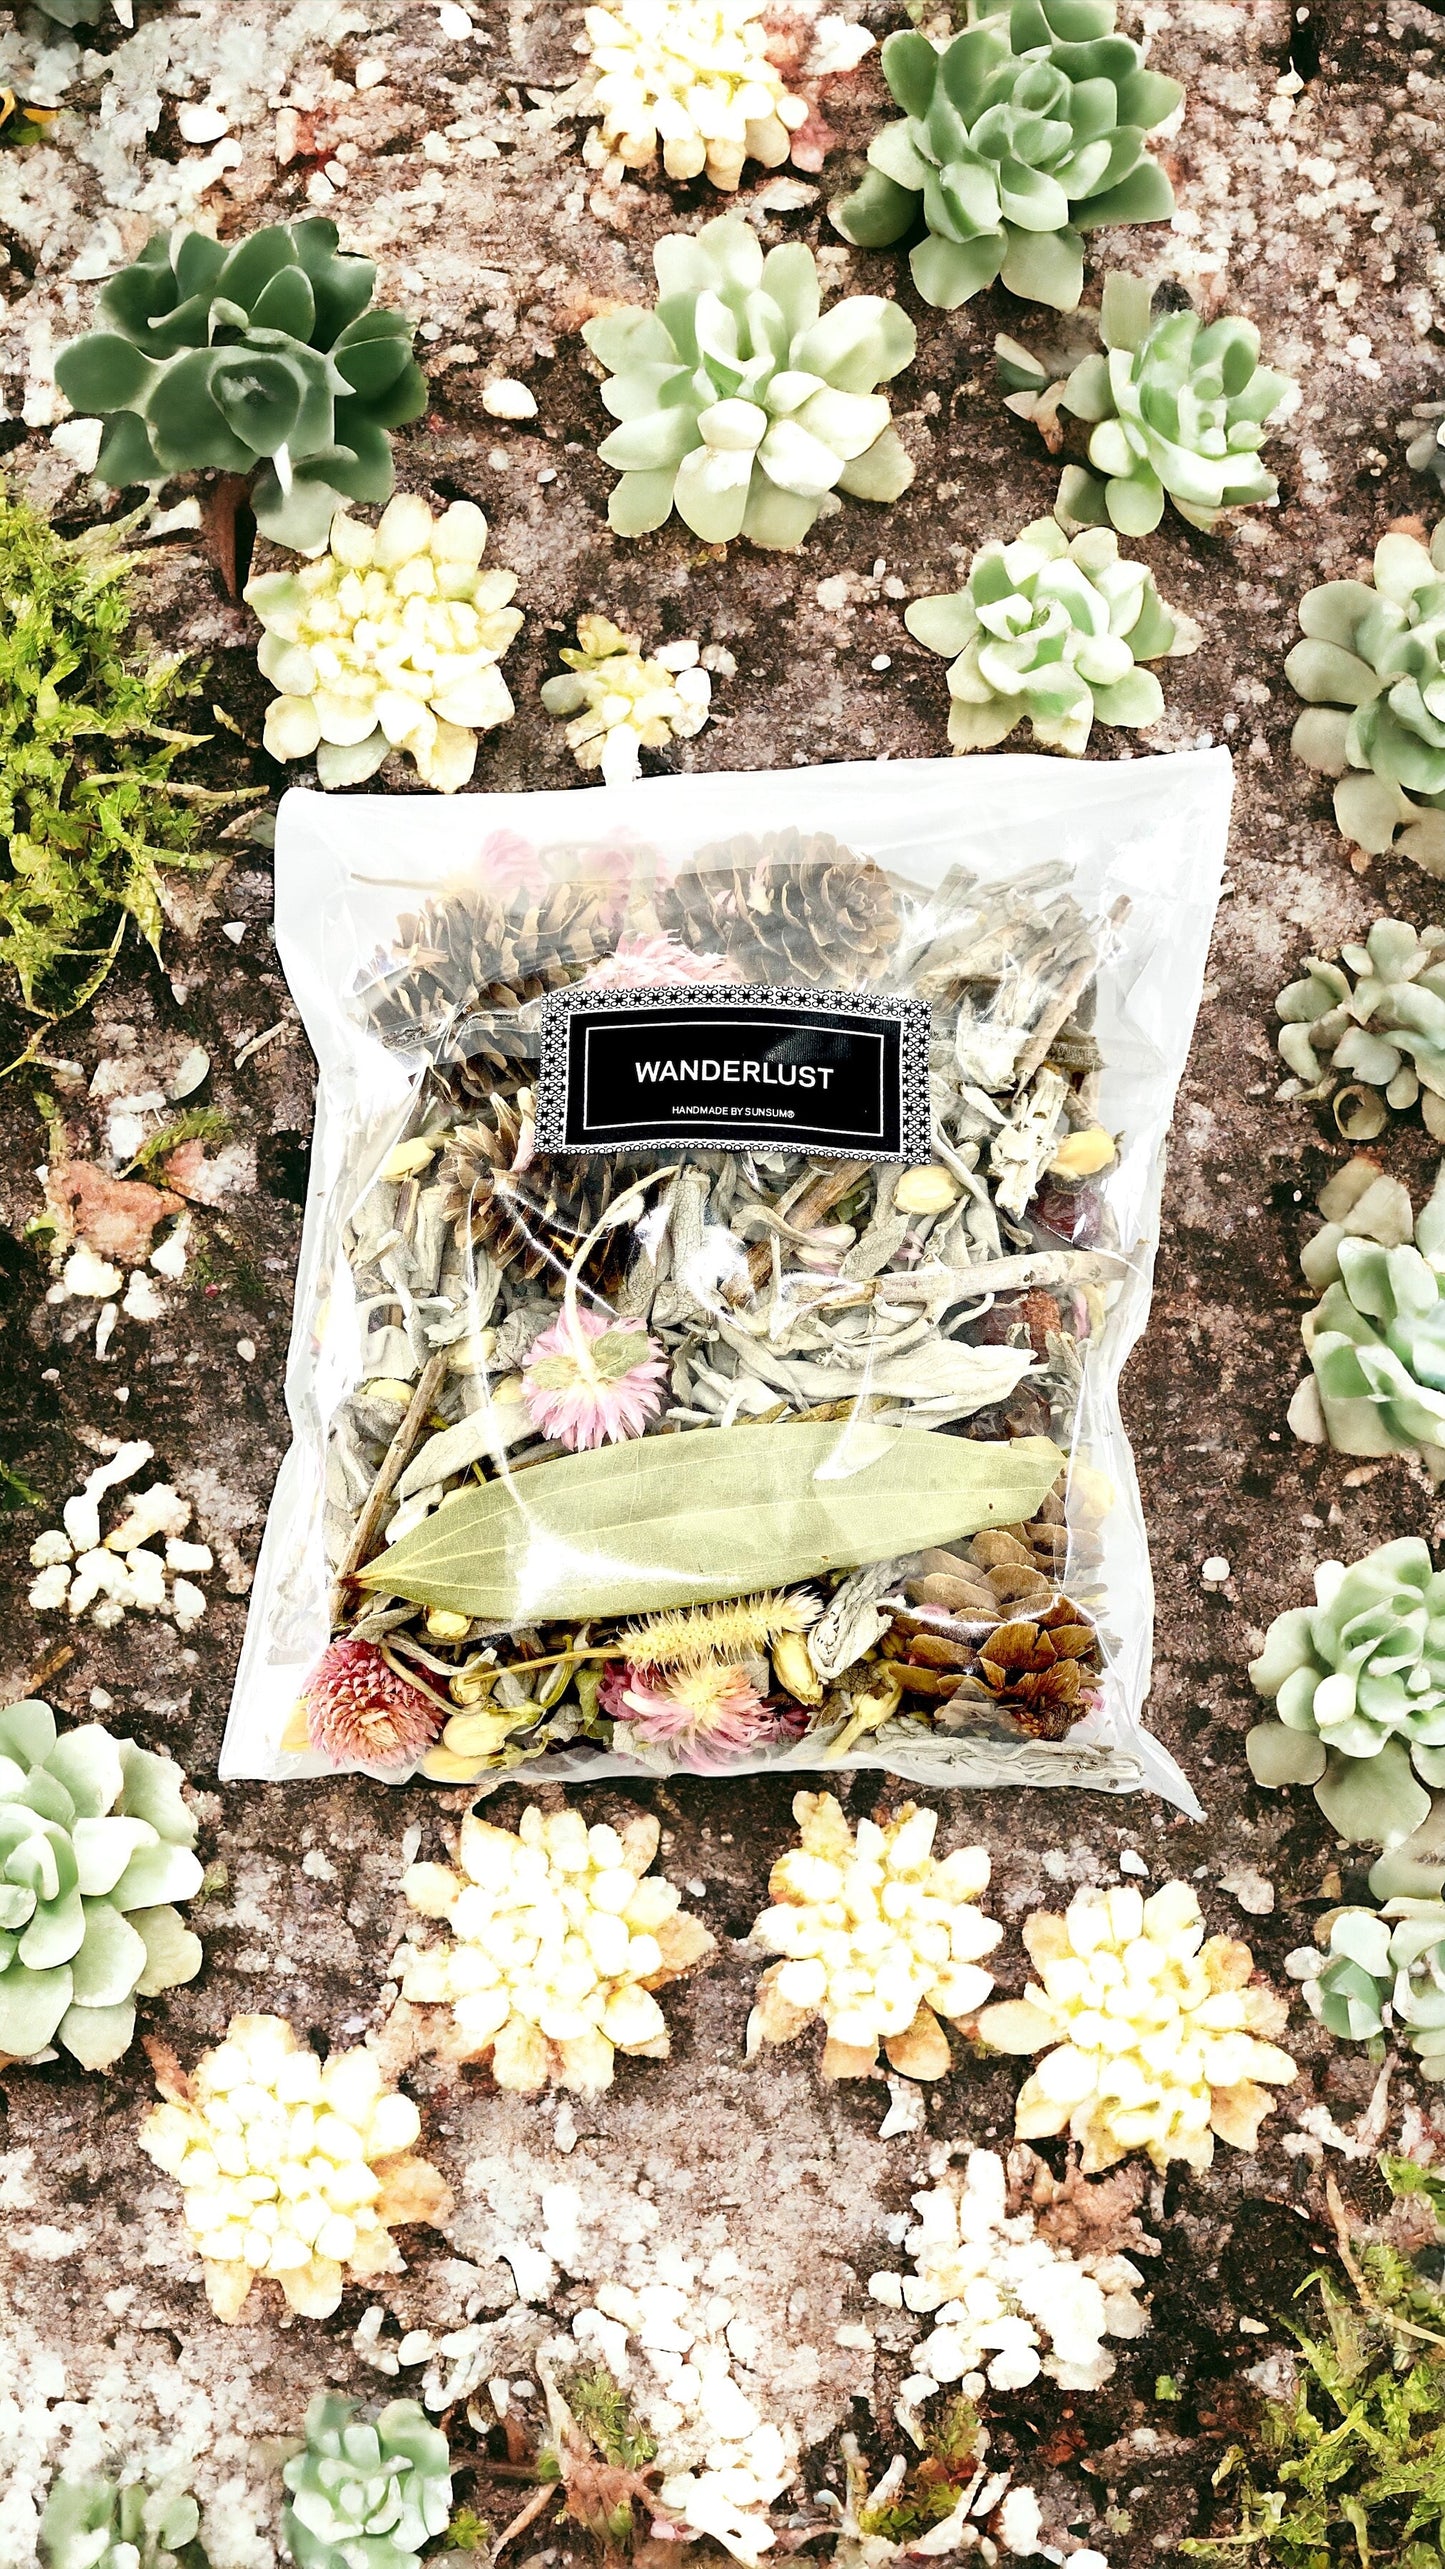 Wanderlust, Wildflower & Sage, Naturally Scented, Loose Dried Flowers, Flower Confetti, Potpourri, 2 oz